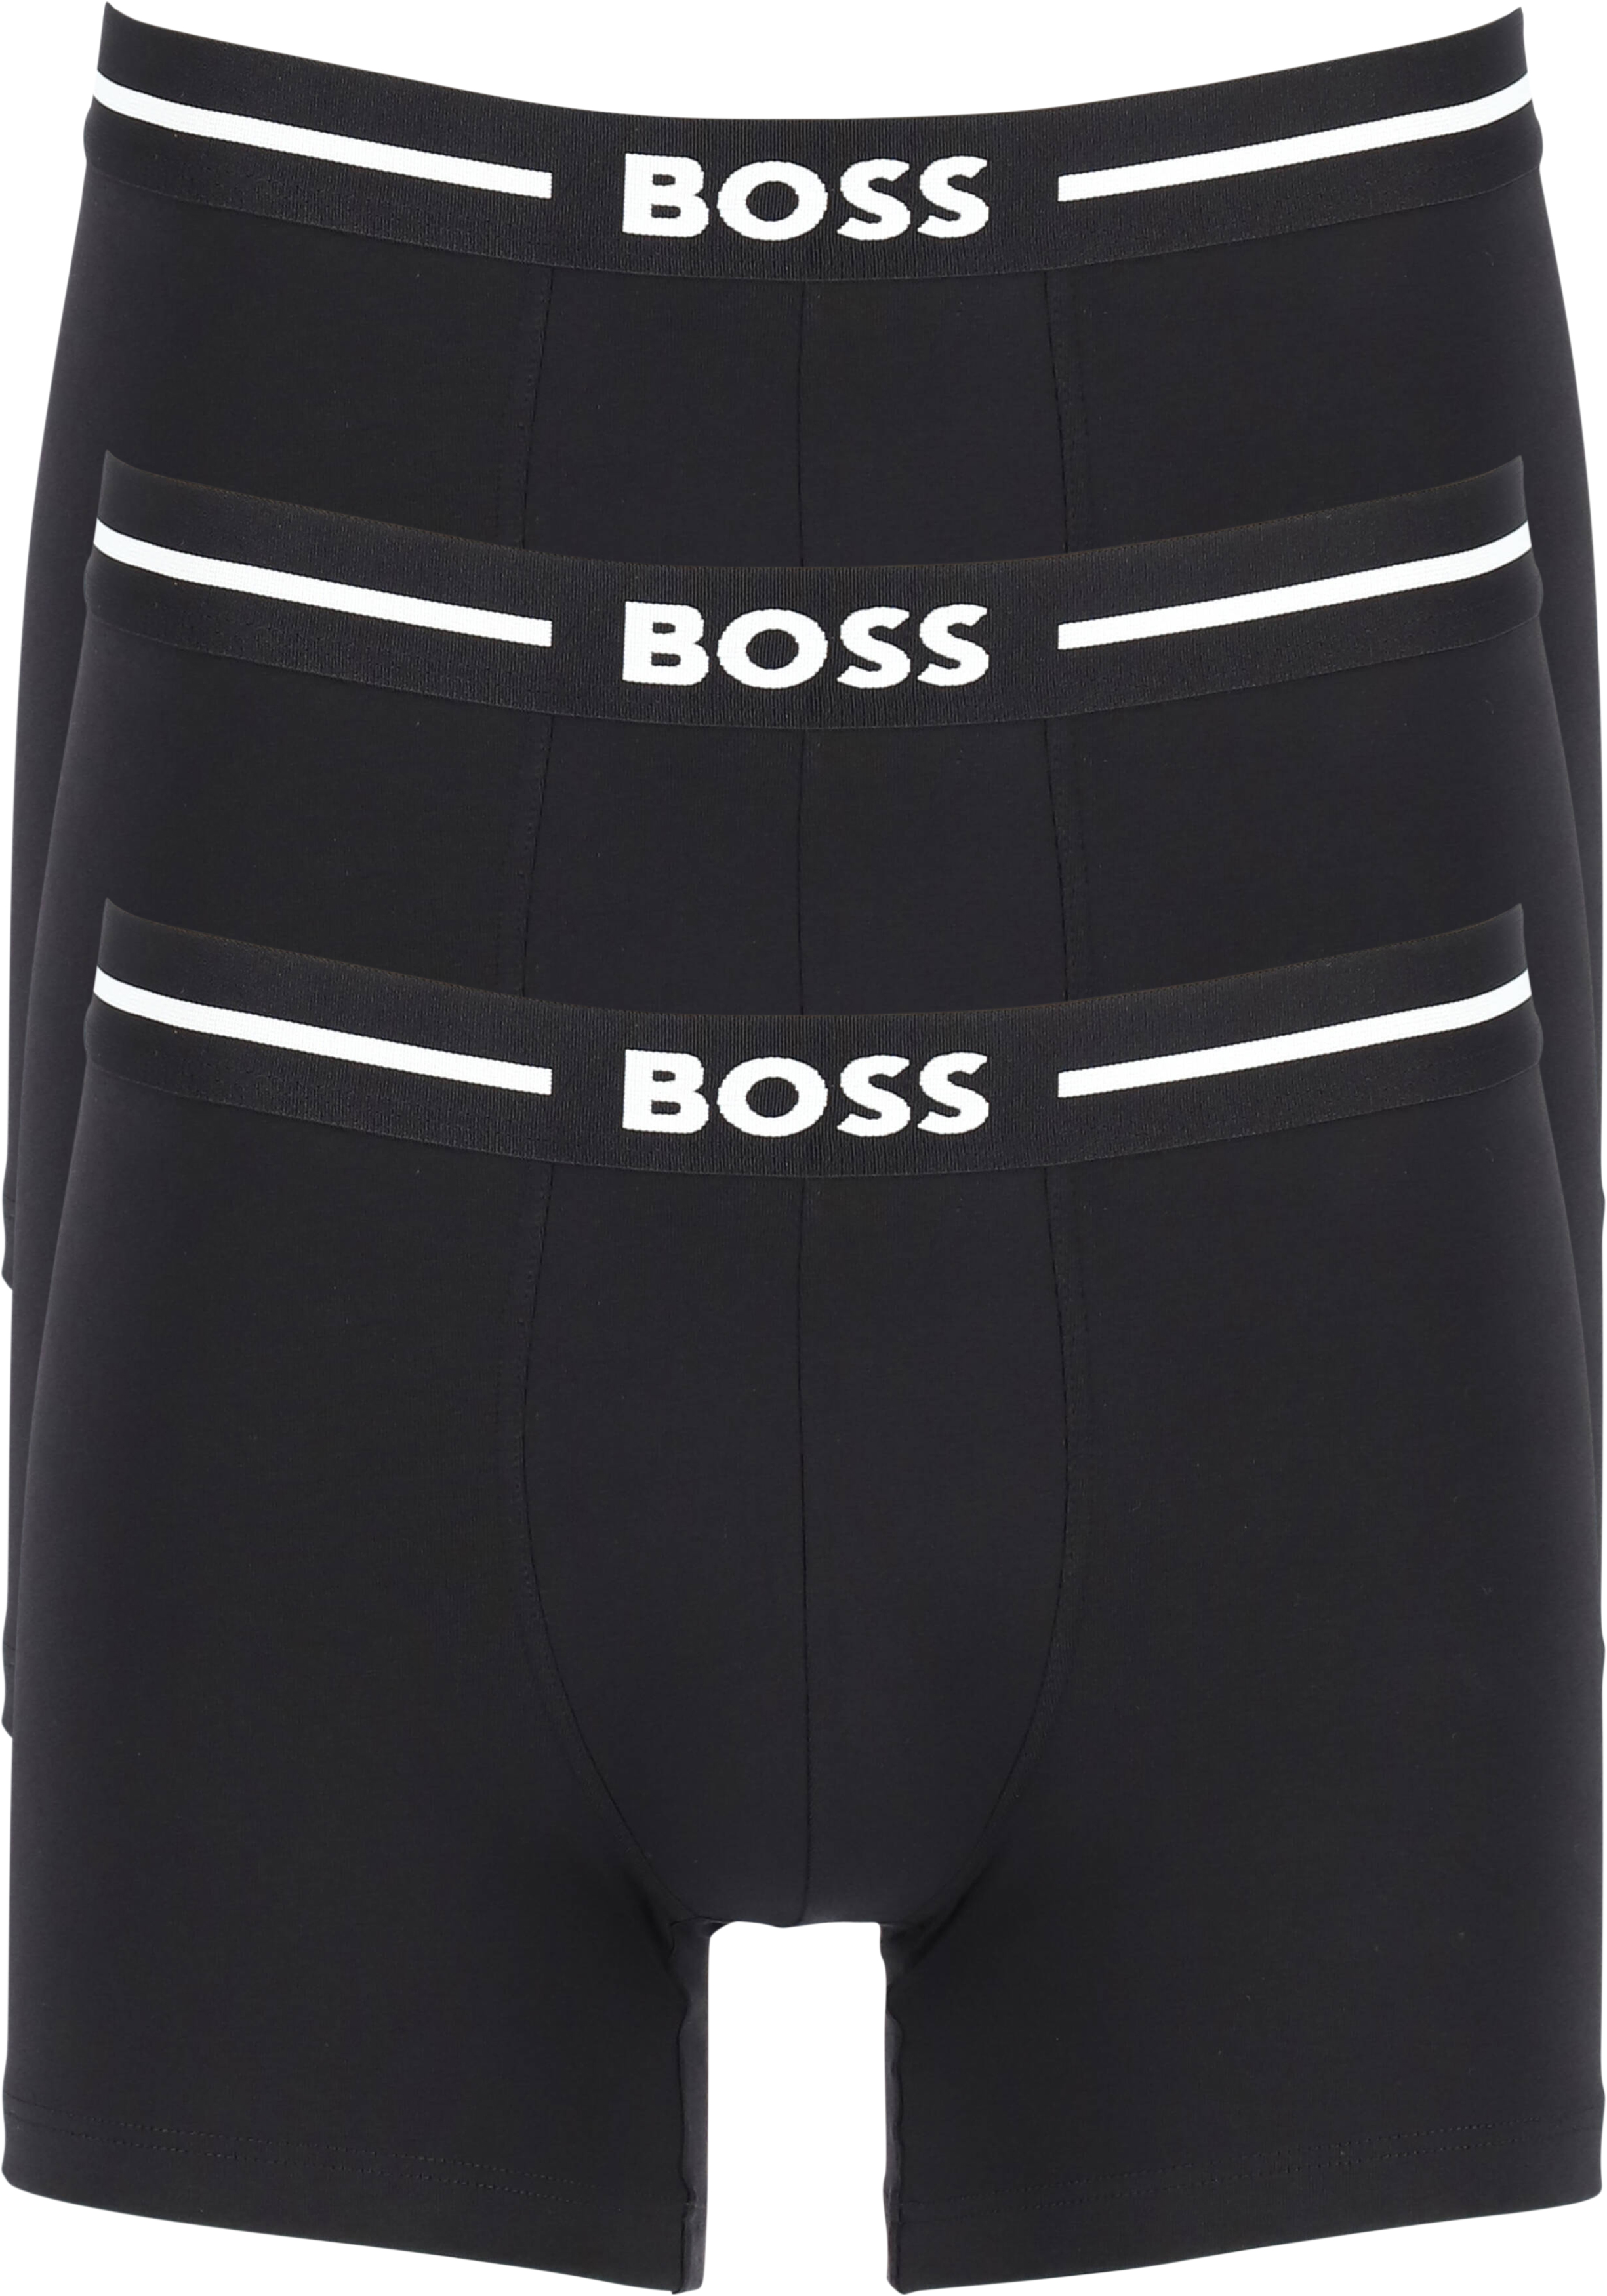 HUGO BOSS Bold boxer briefs (3-pack), heren boxers normale lengte, zwart